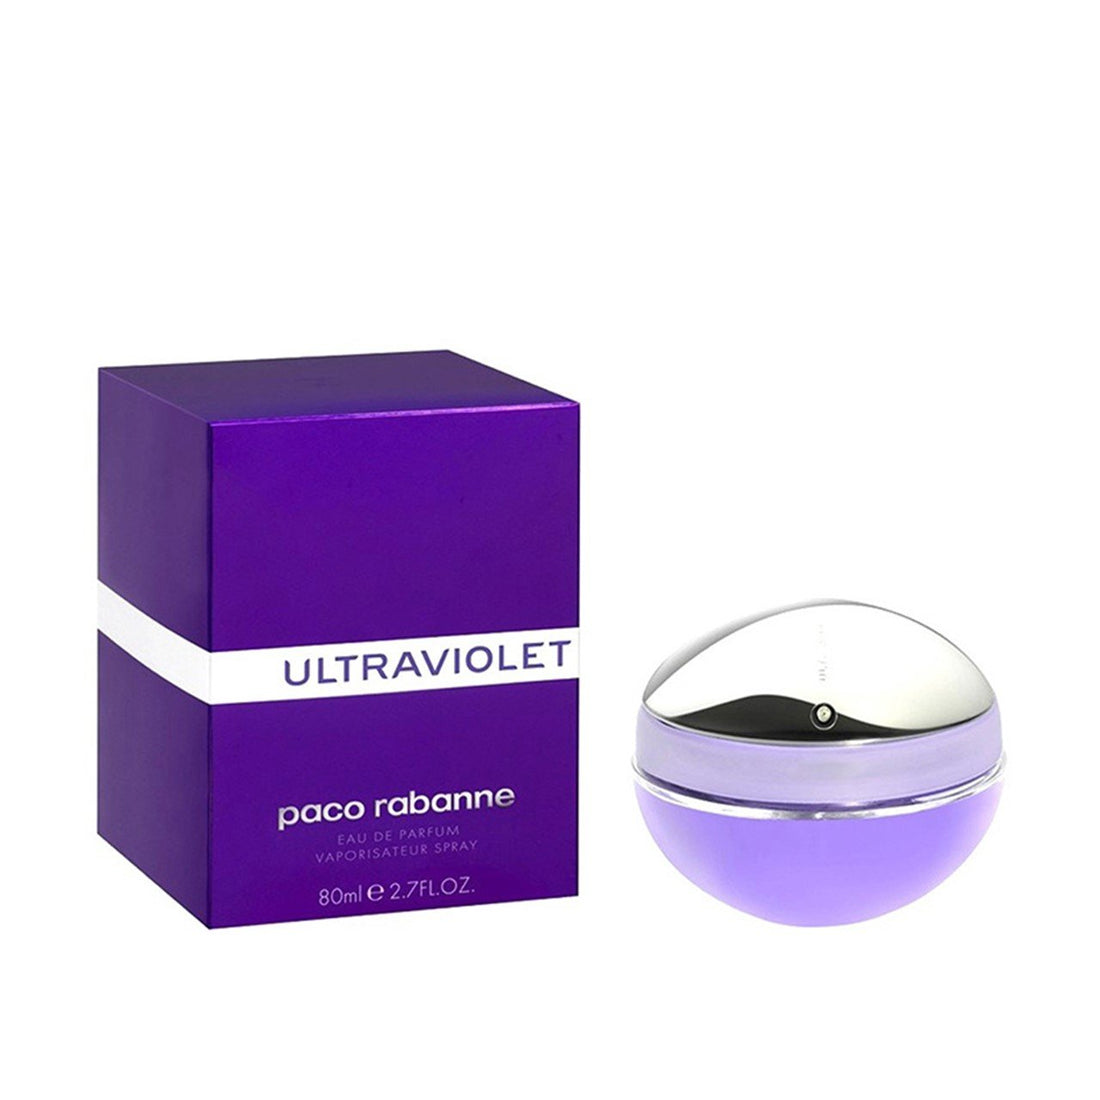 Paco Rabanne Ultraviolet For Women Eau deParfum 80ml (2.7fl oz)